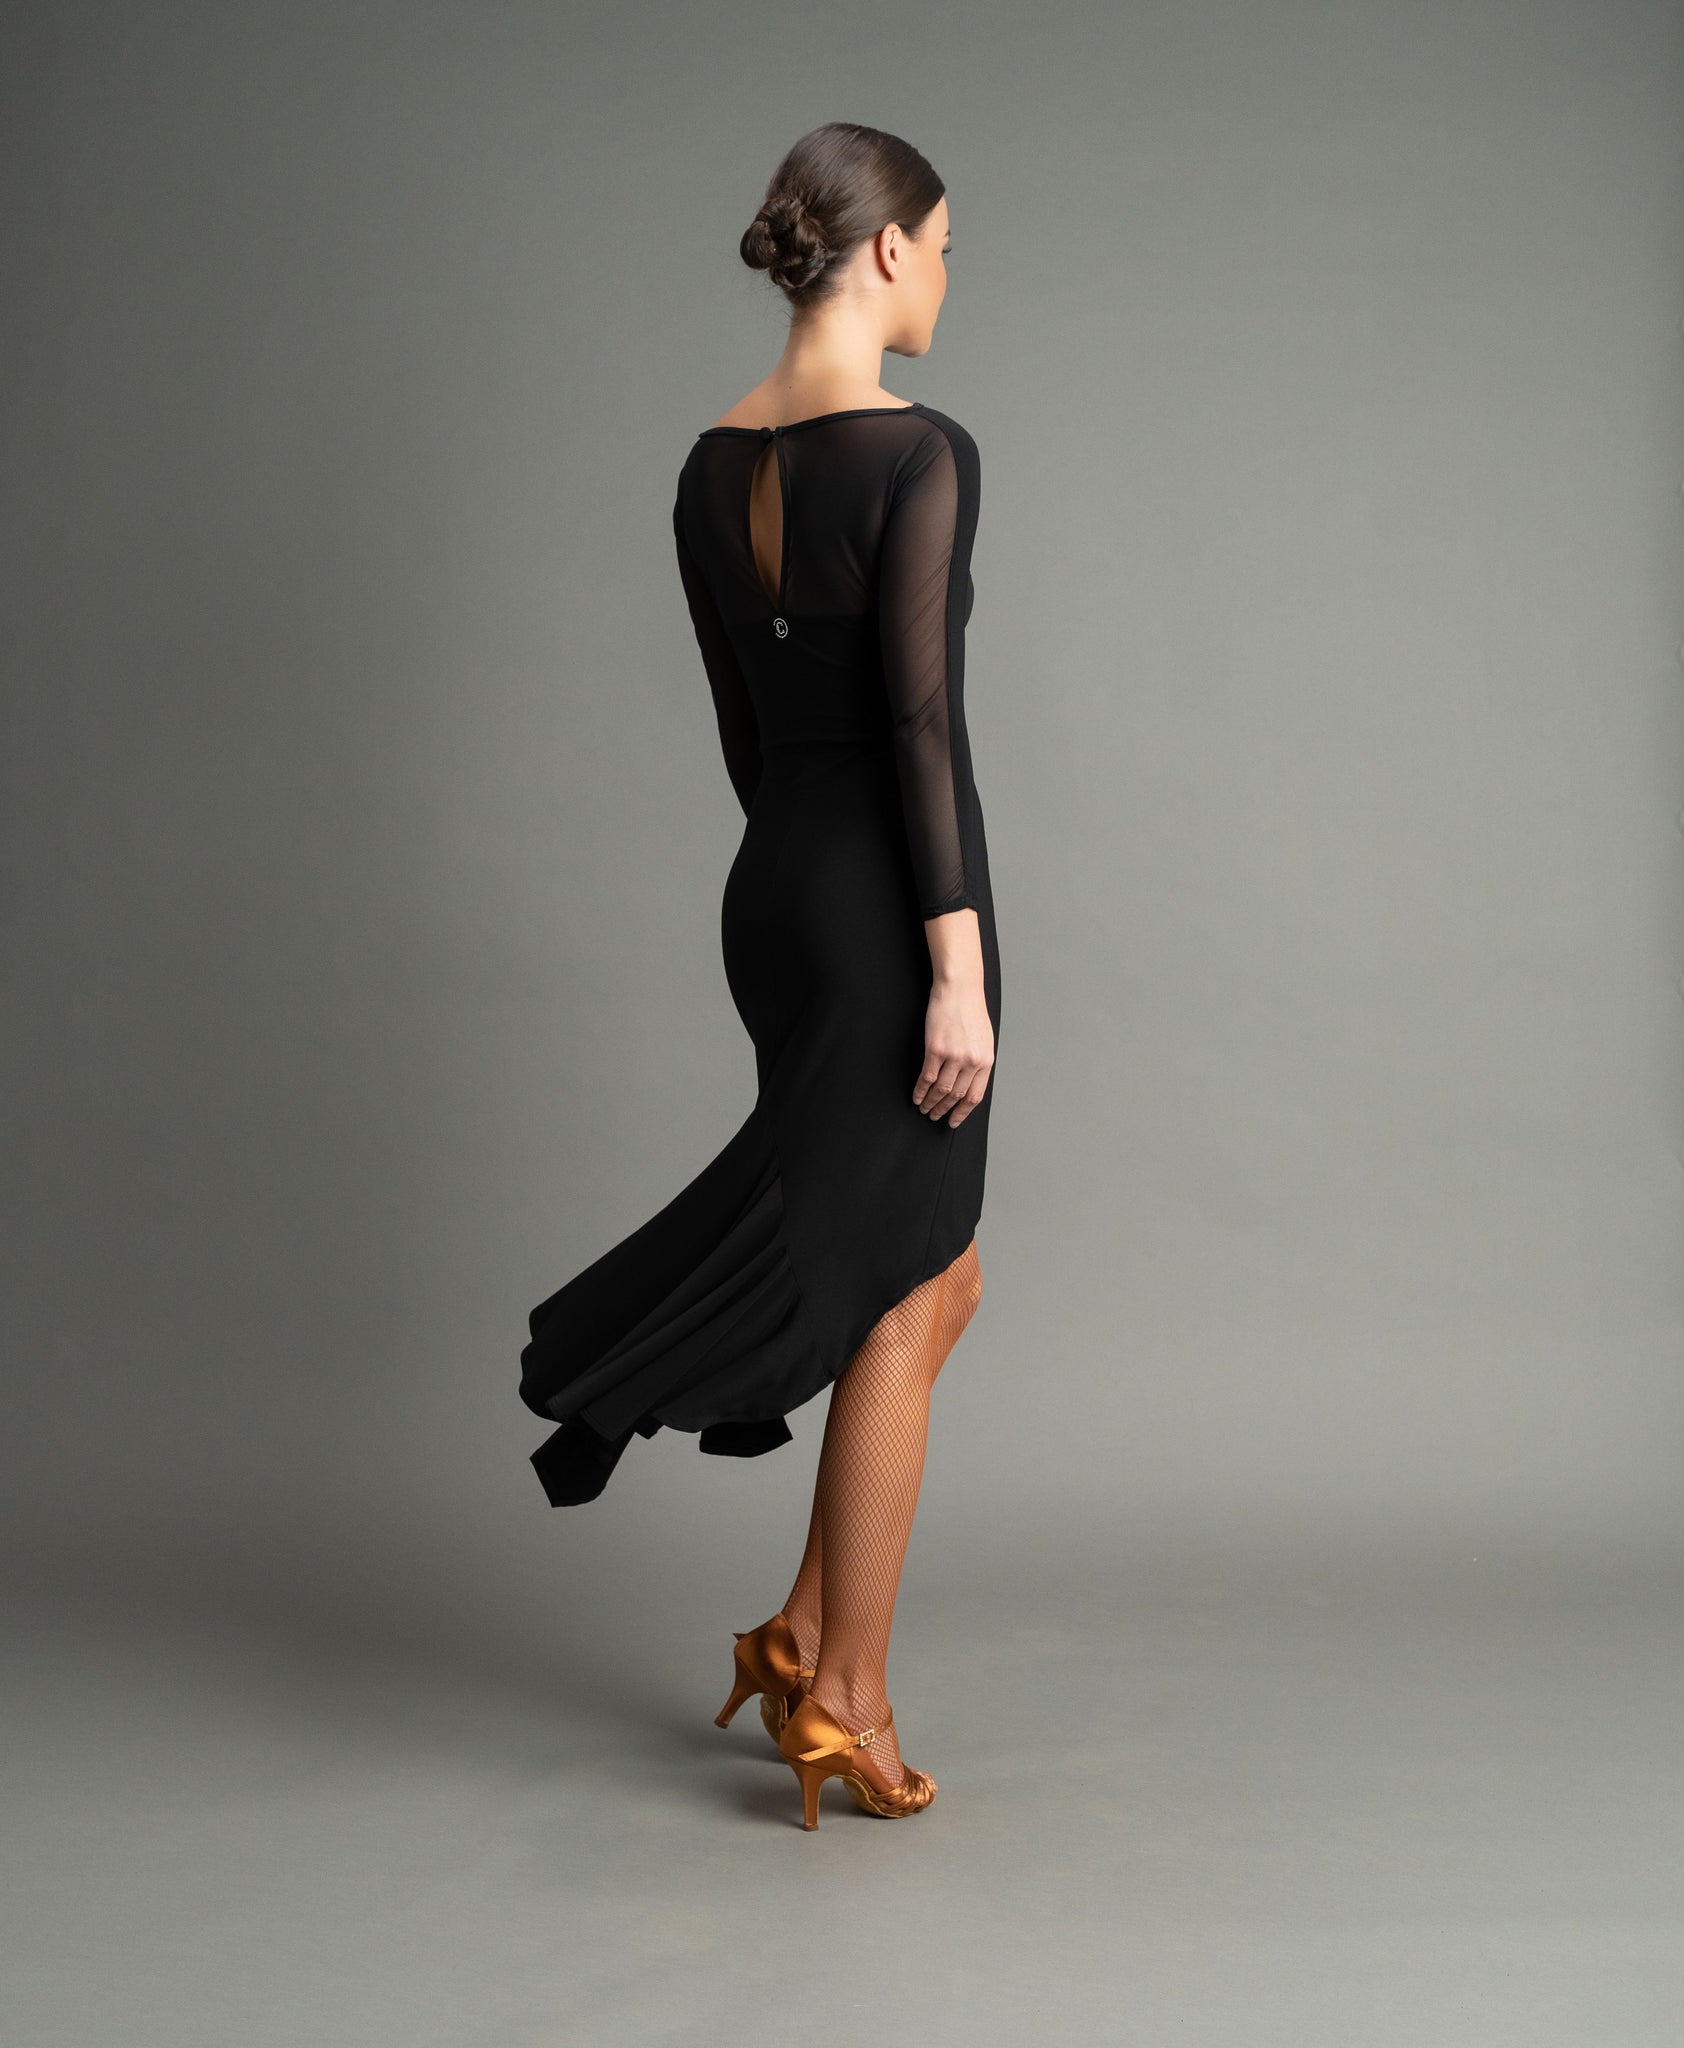 Chrisanne Clover DanceWear KIRA Latin Dress